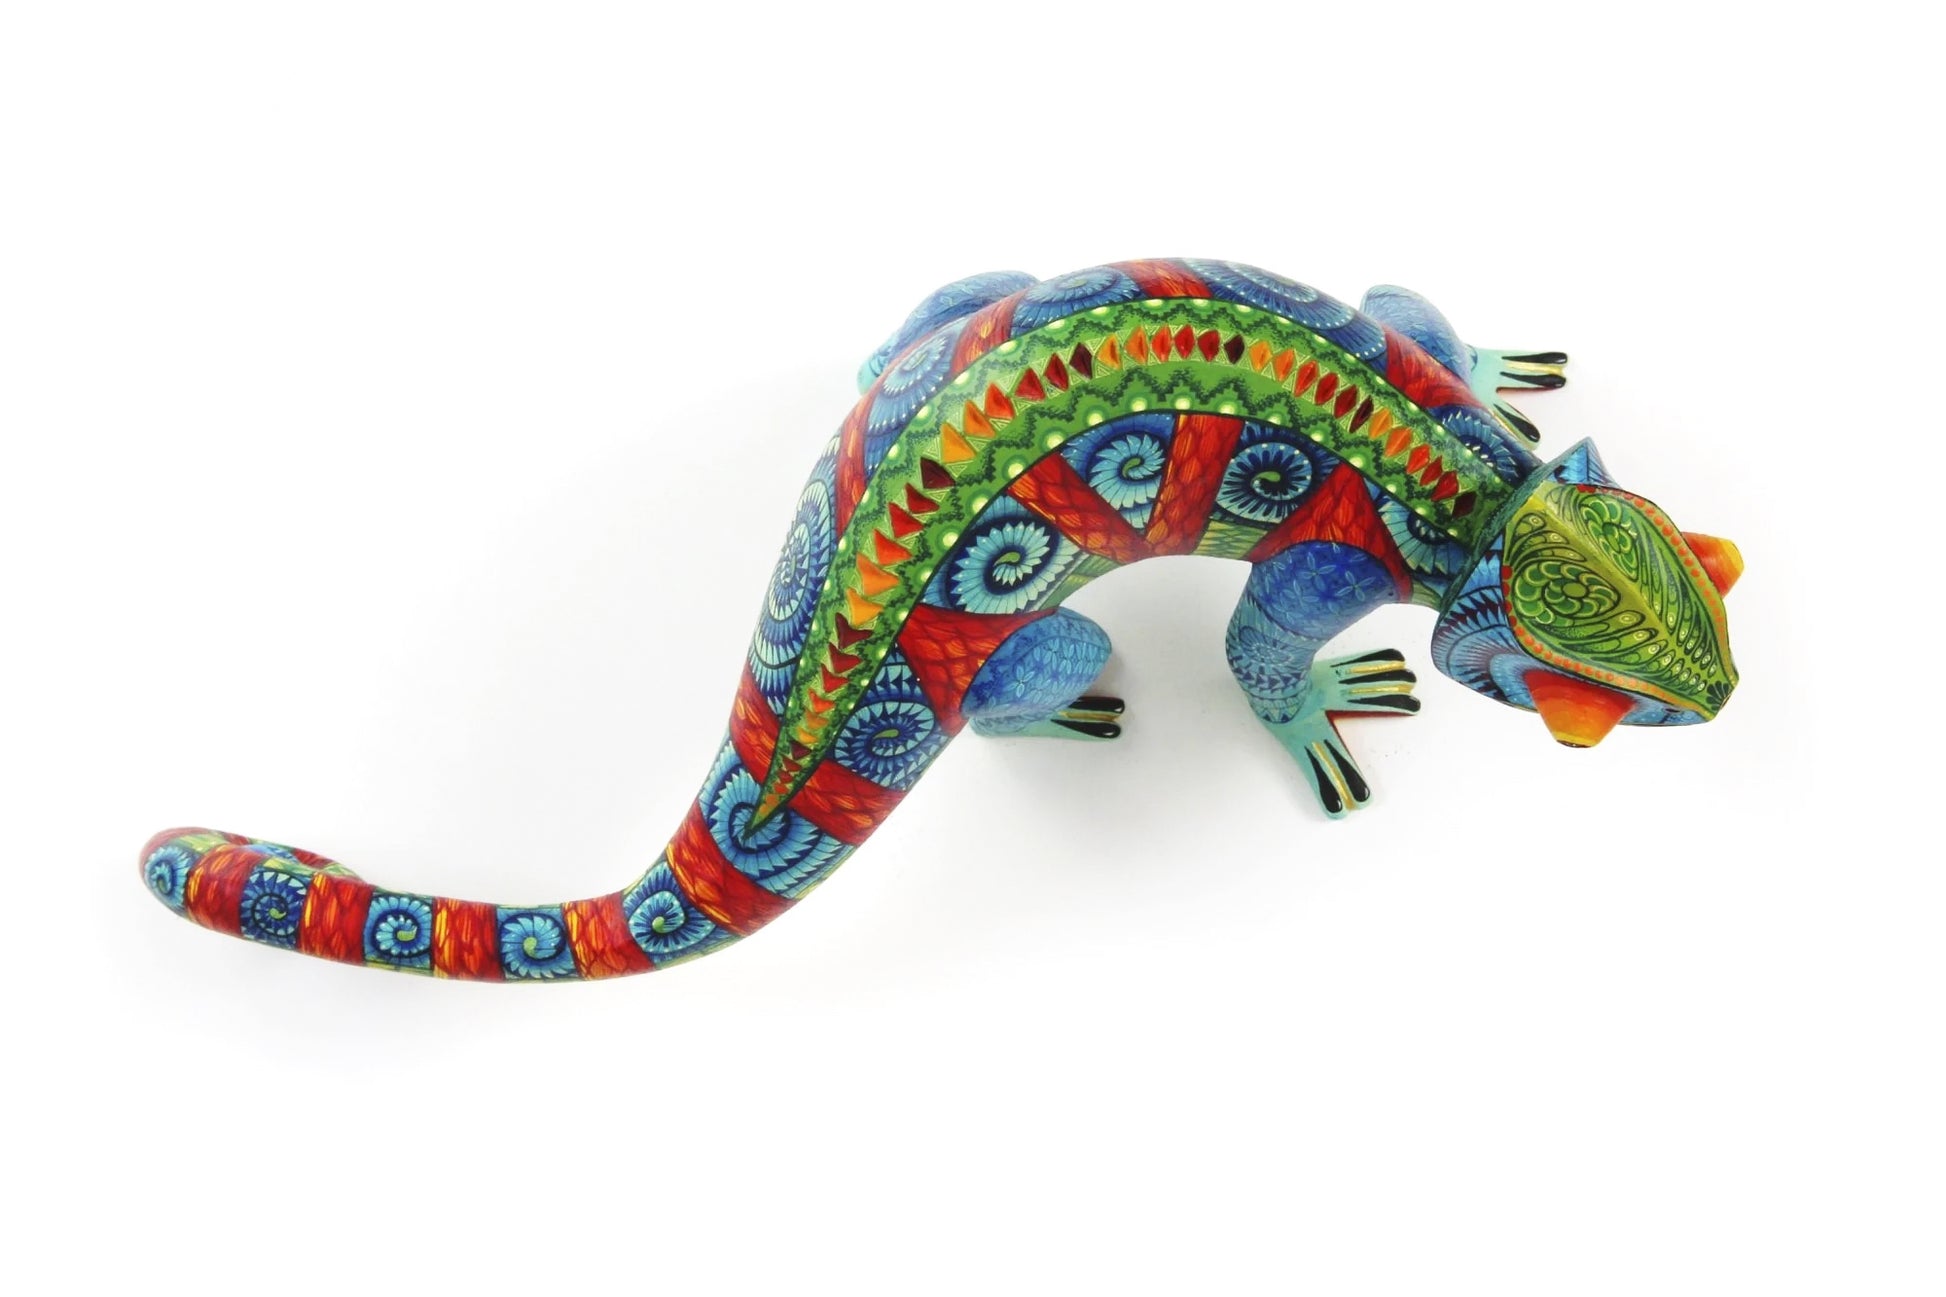 Painted Chameleon Sculpture